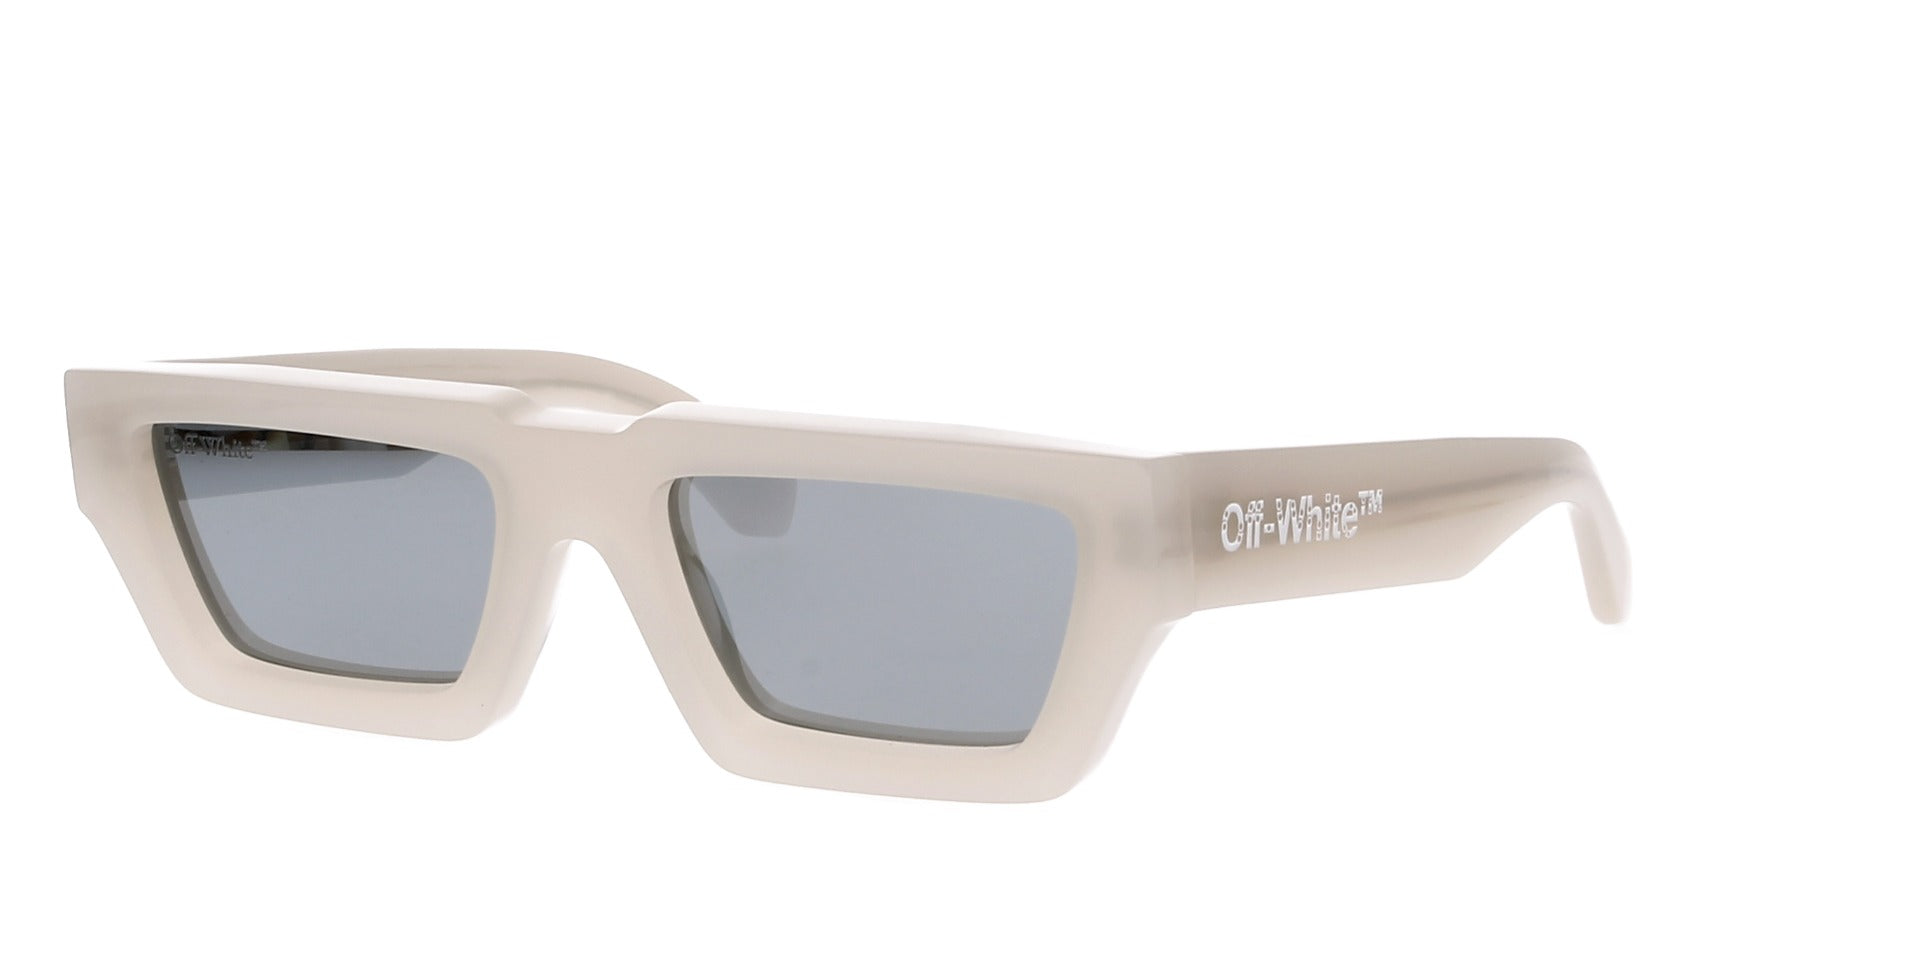 Off-White Manchester Sunglasses - Beige Silver